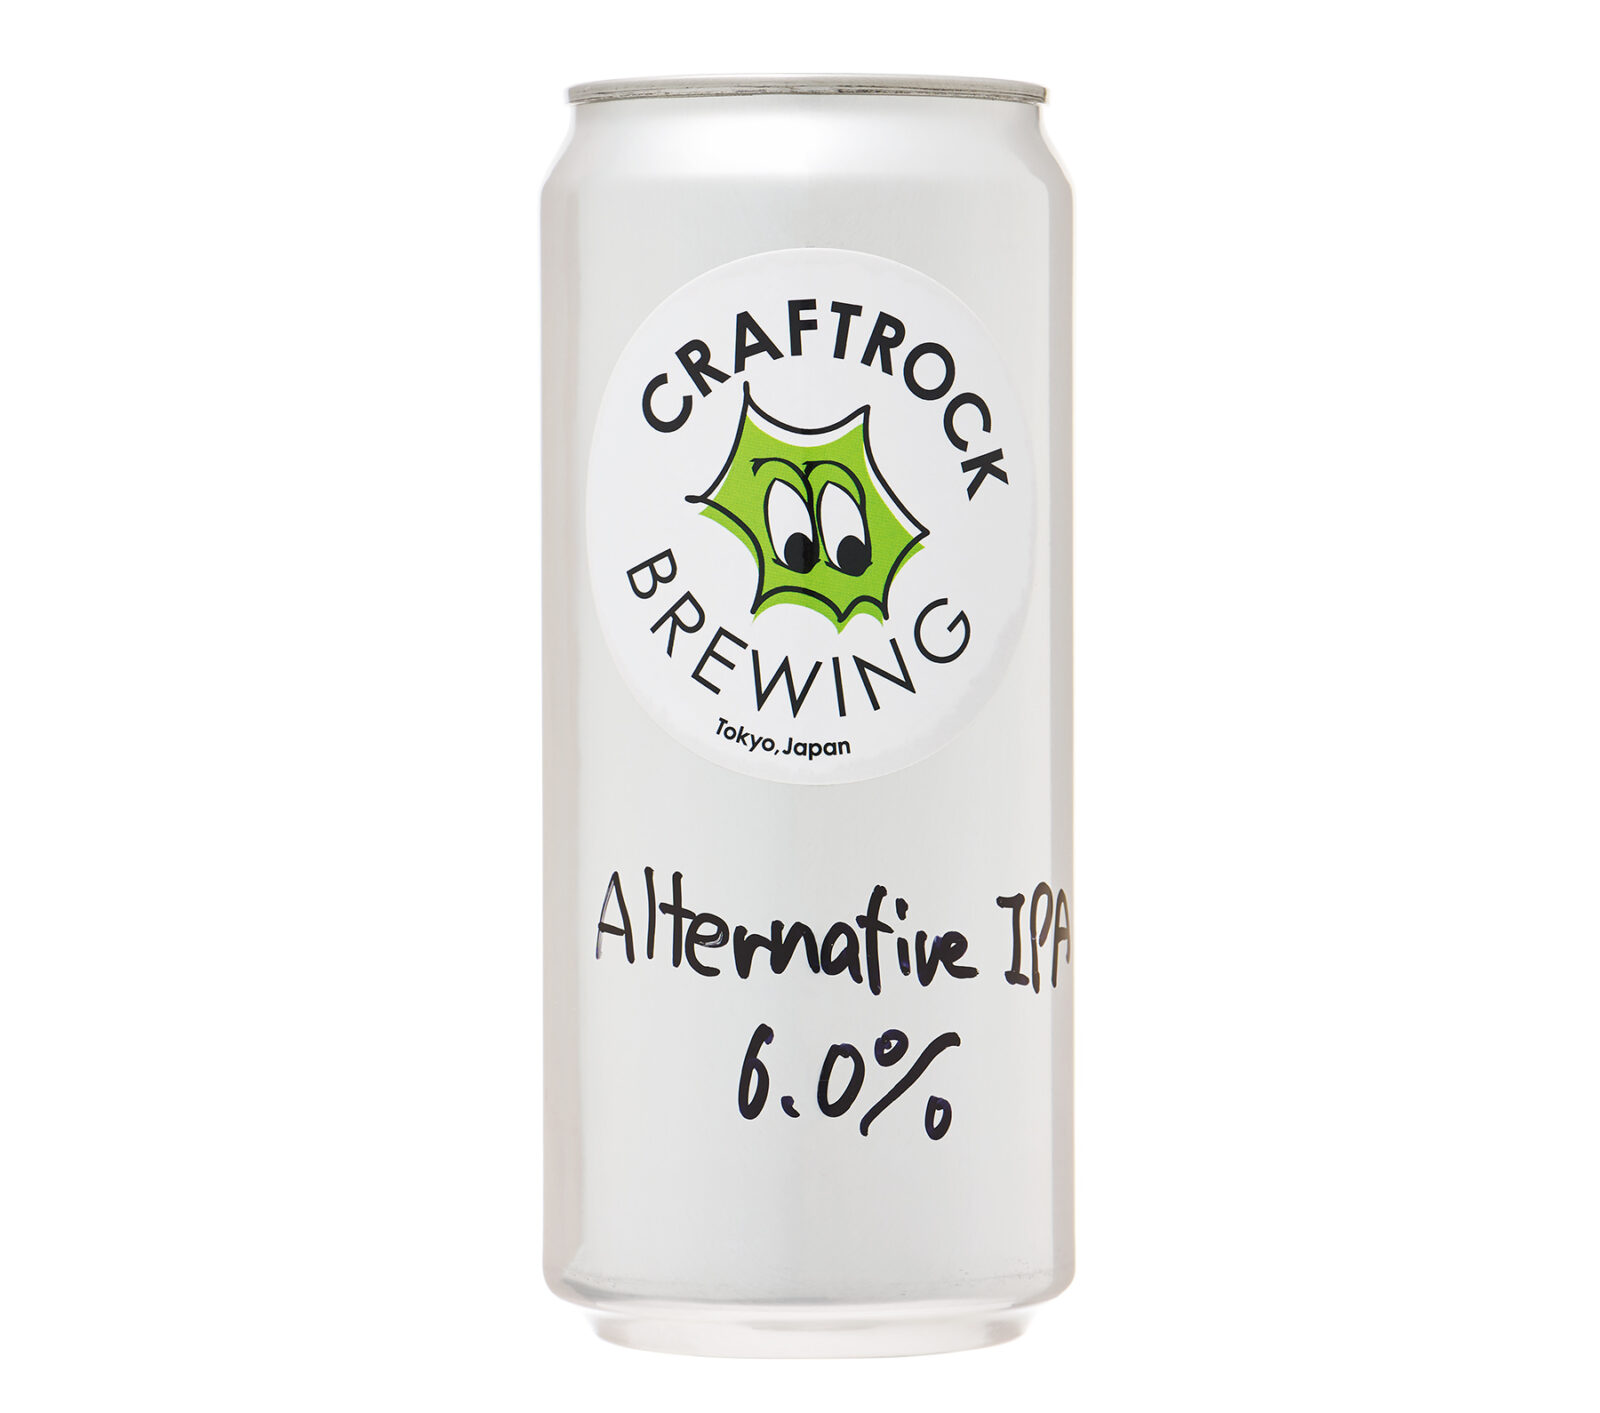 CRAFTROCK Brewing（日本・東京）のAlternative IPA（オルタナティブ アイピーエー）